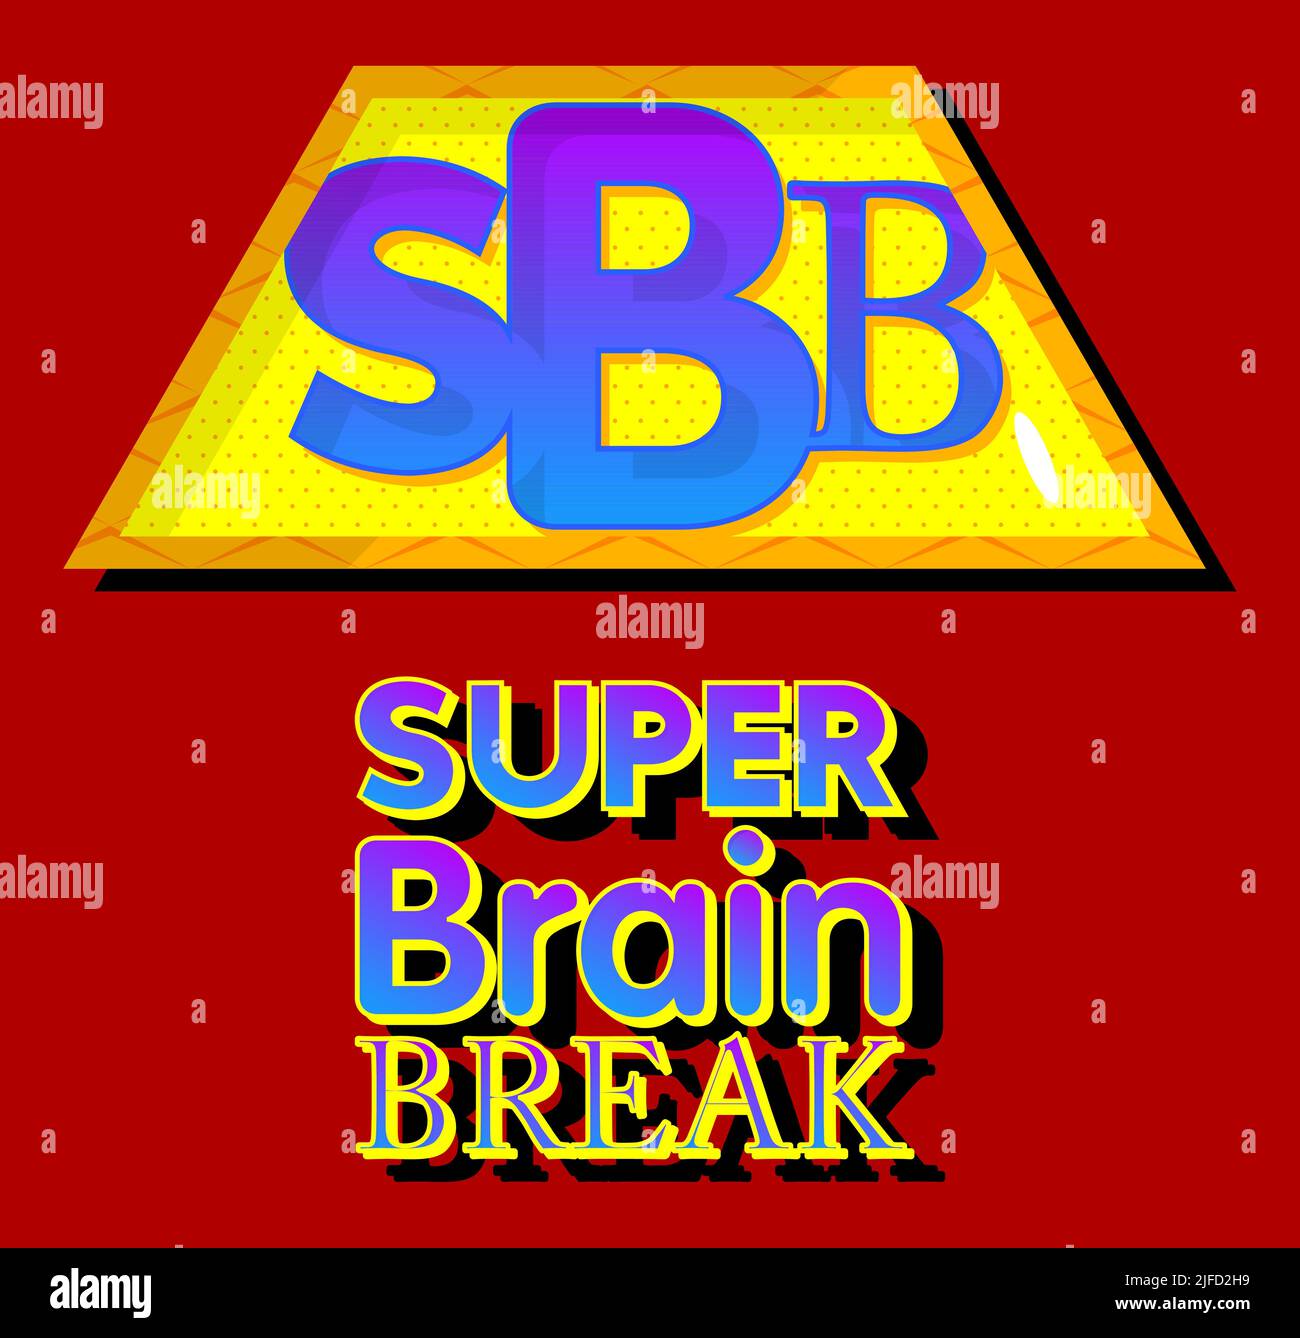 Superhelden-Wappen mit Super Brain Break-Symbol. Farbenfrohe Vektorgrafik im Comic-Stil. Stock Vektor